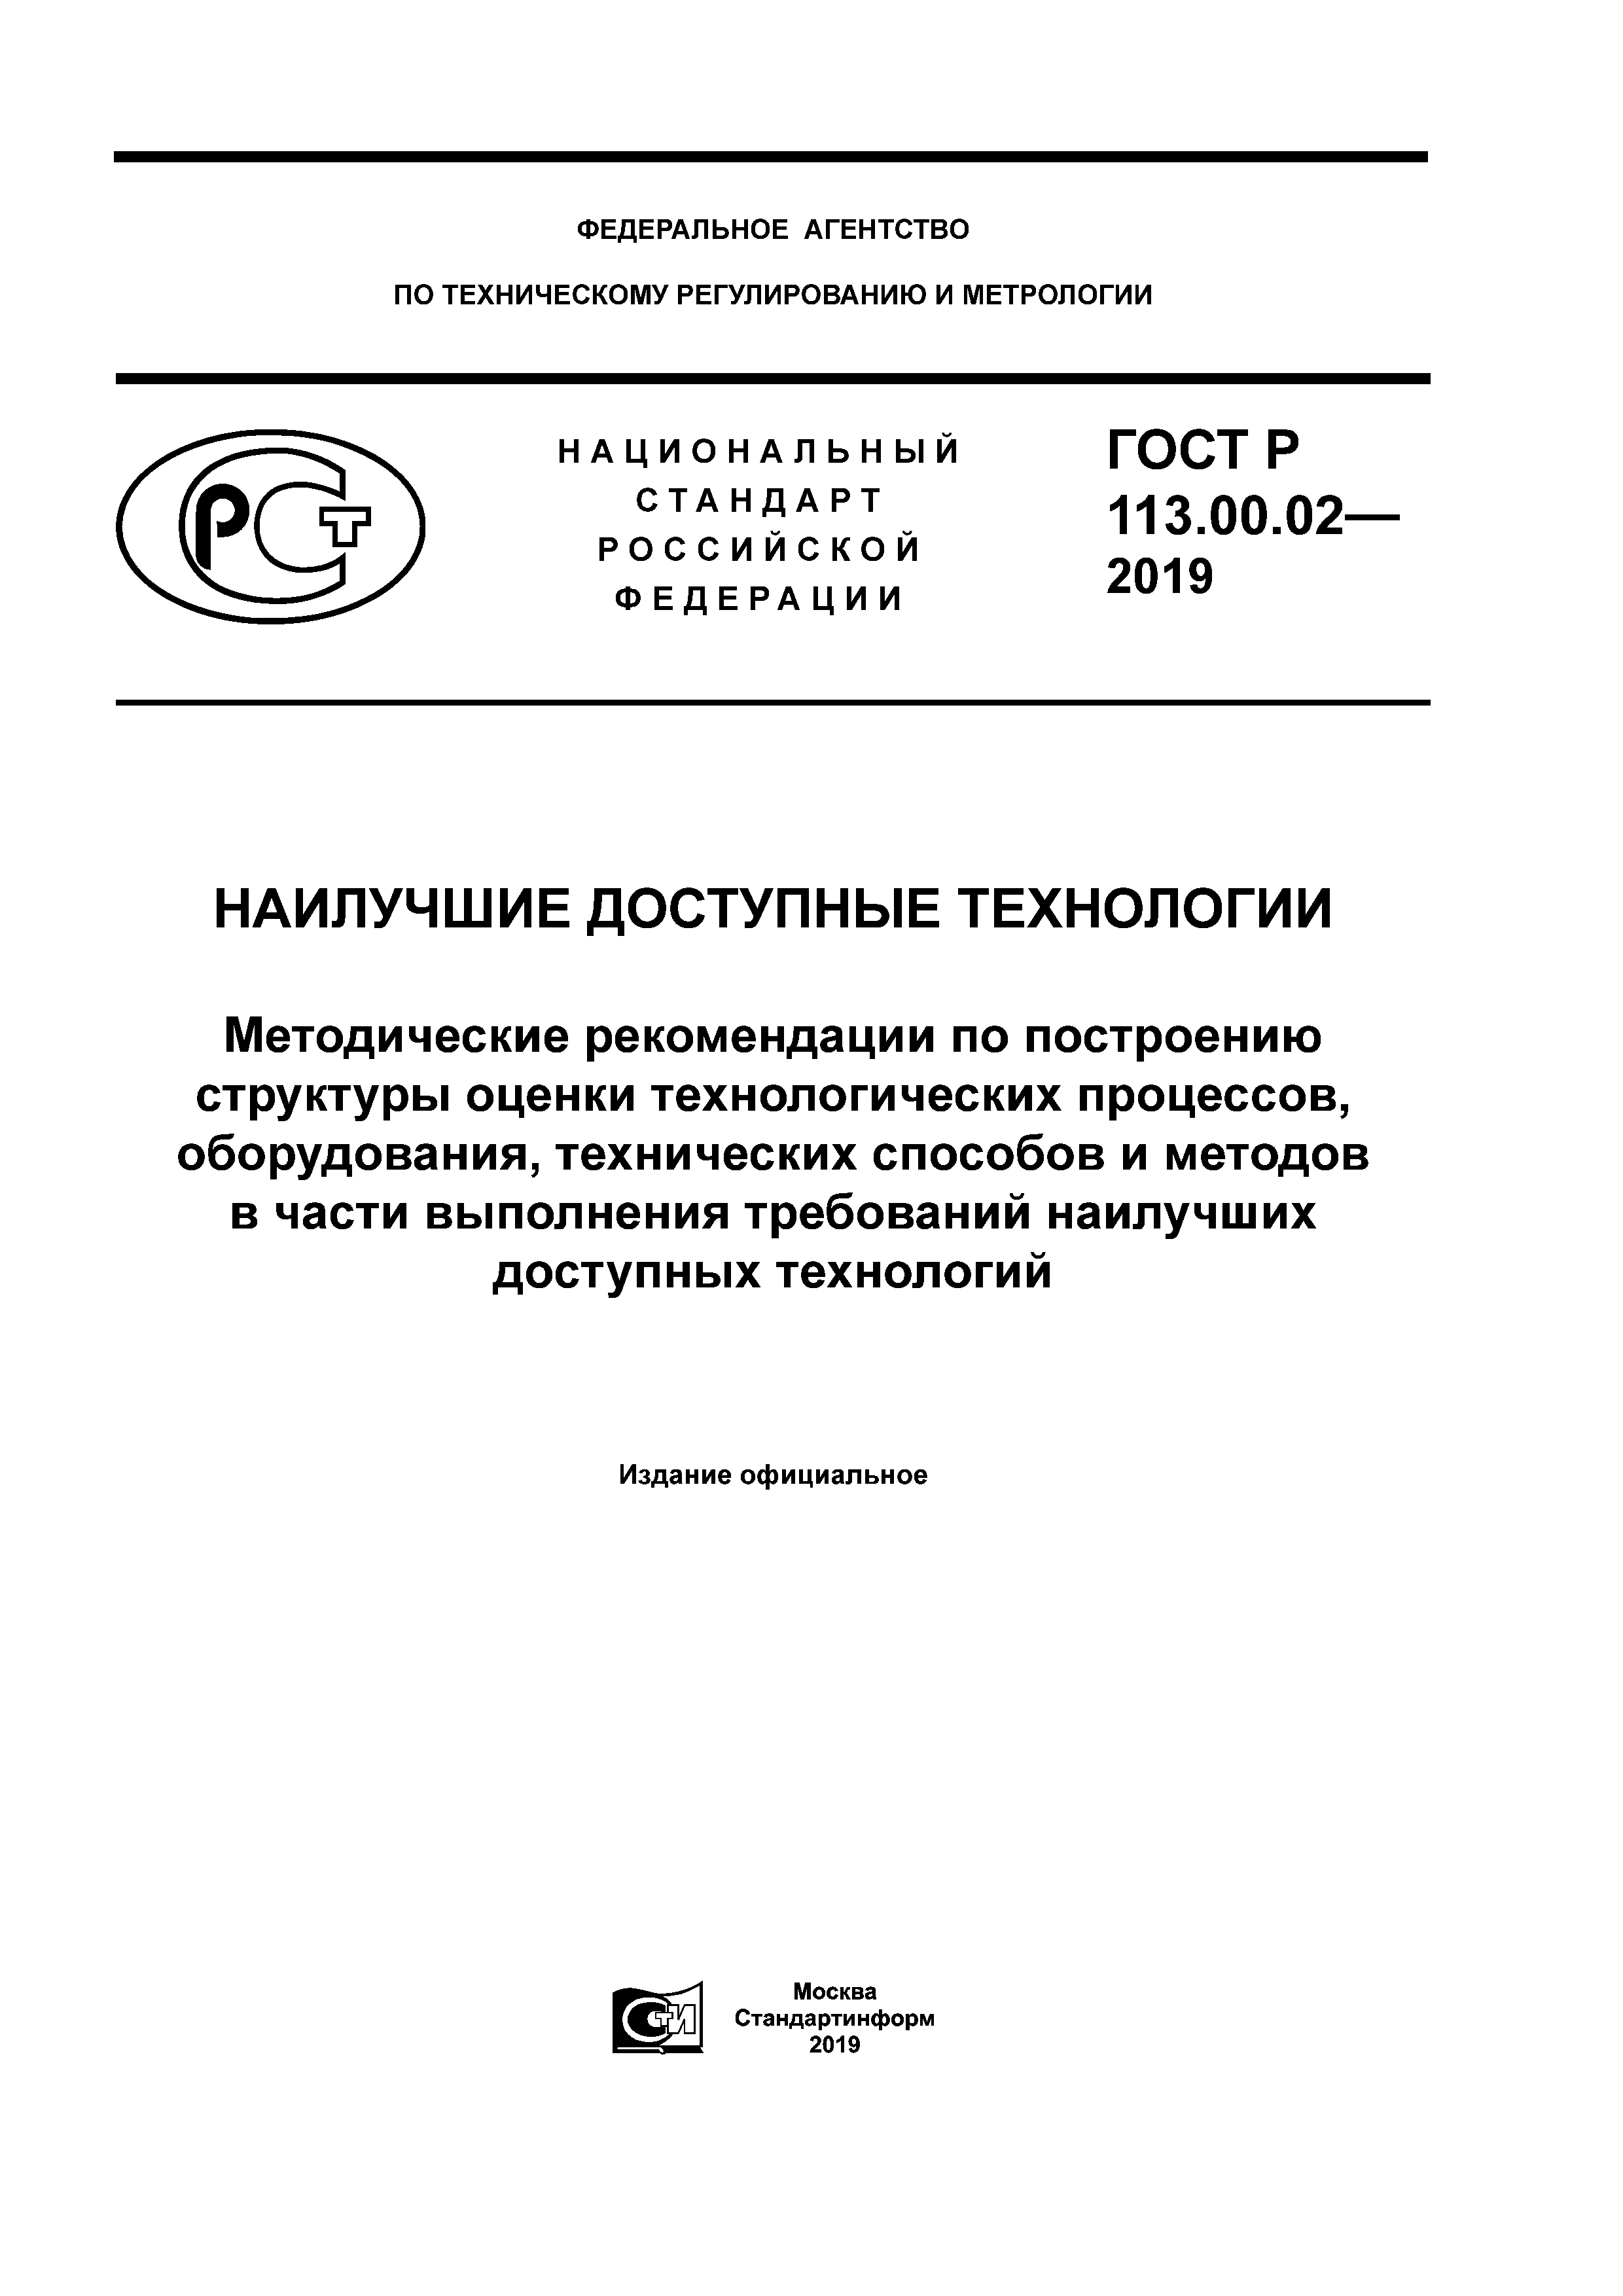 ГОСТ Р 113.00.02-2019